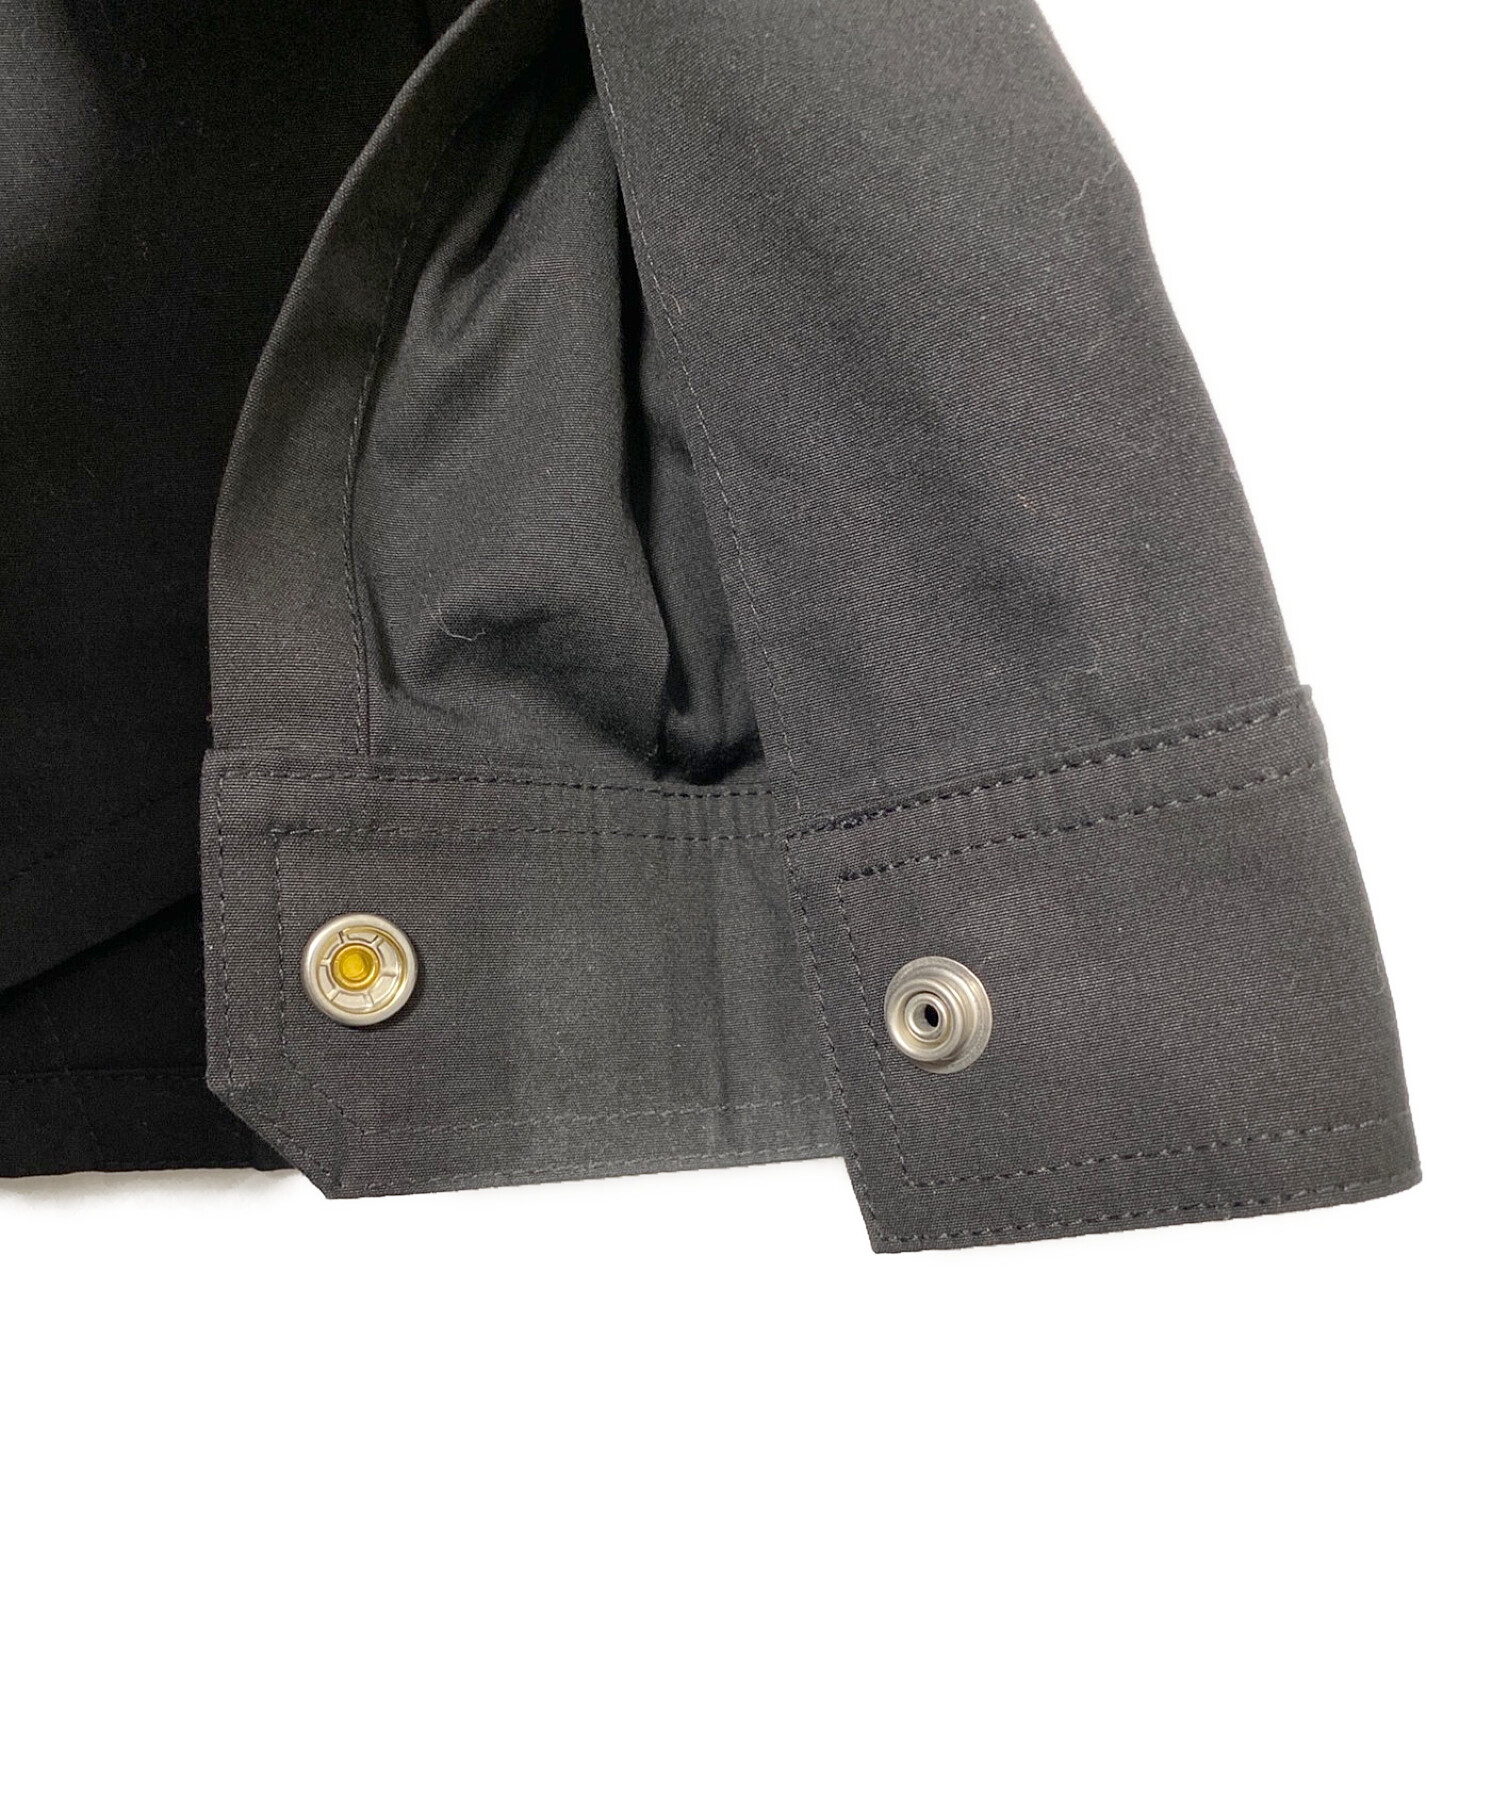 RICK OWENS (リックオウエンス) Buttoned Embroidered Shirt ブラック サイズ:48